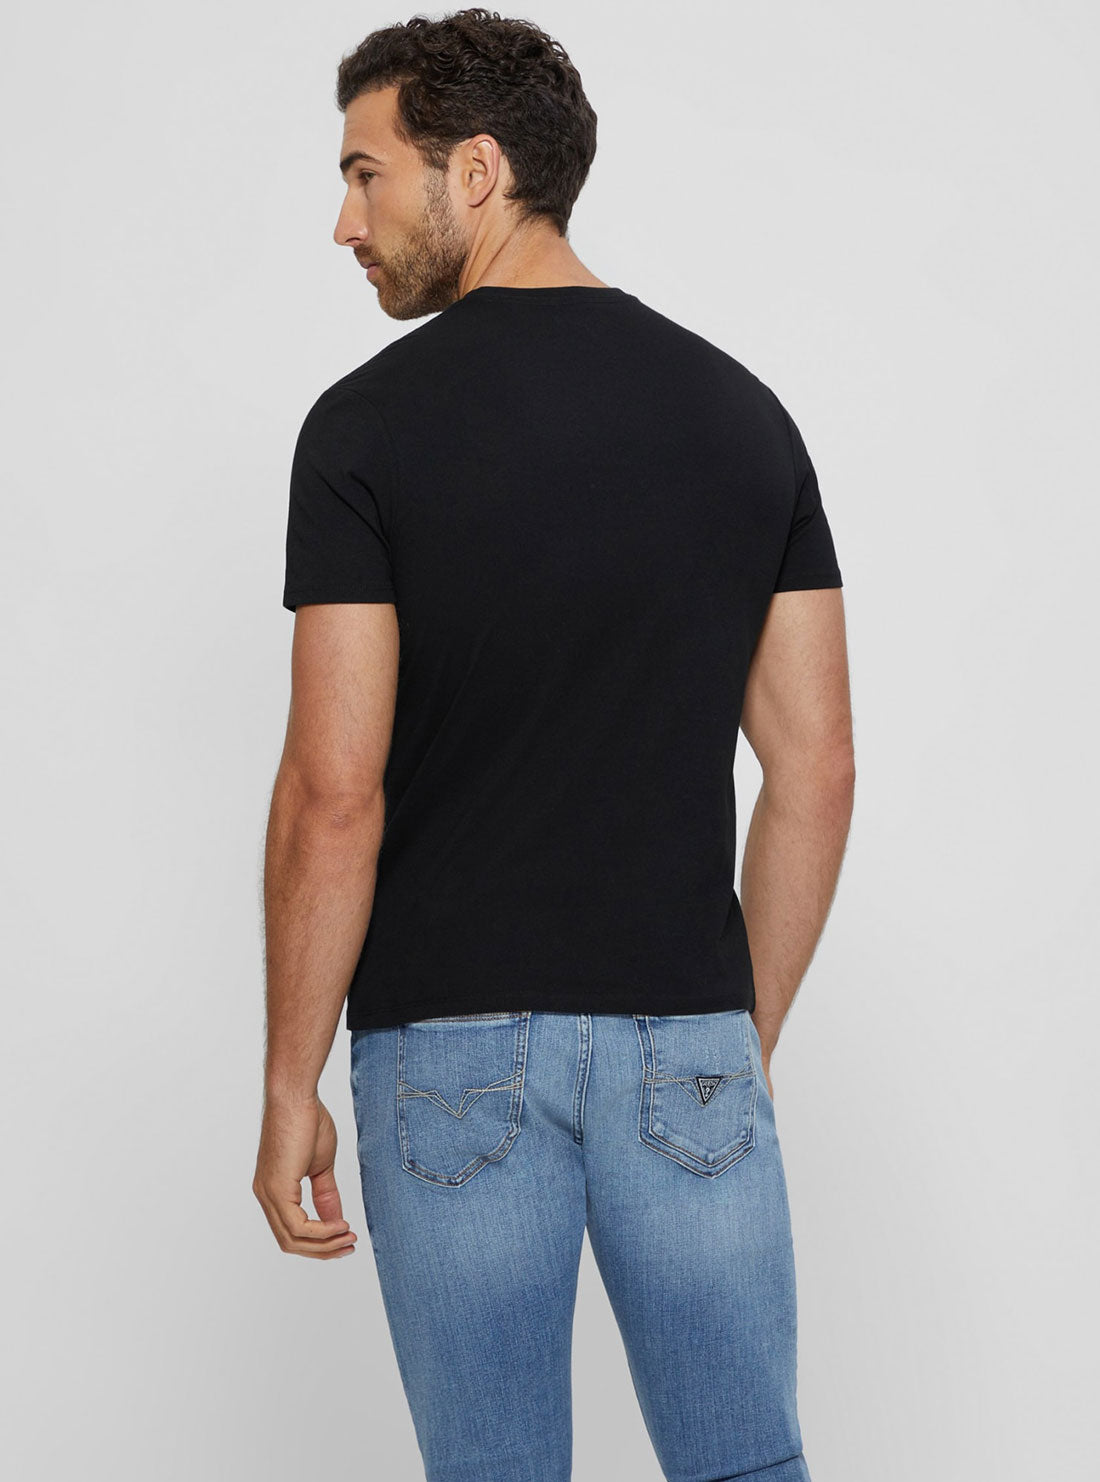 Black Palm Print Triangle Logo T-Shirt | GUESS men's apparel | back view